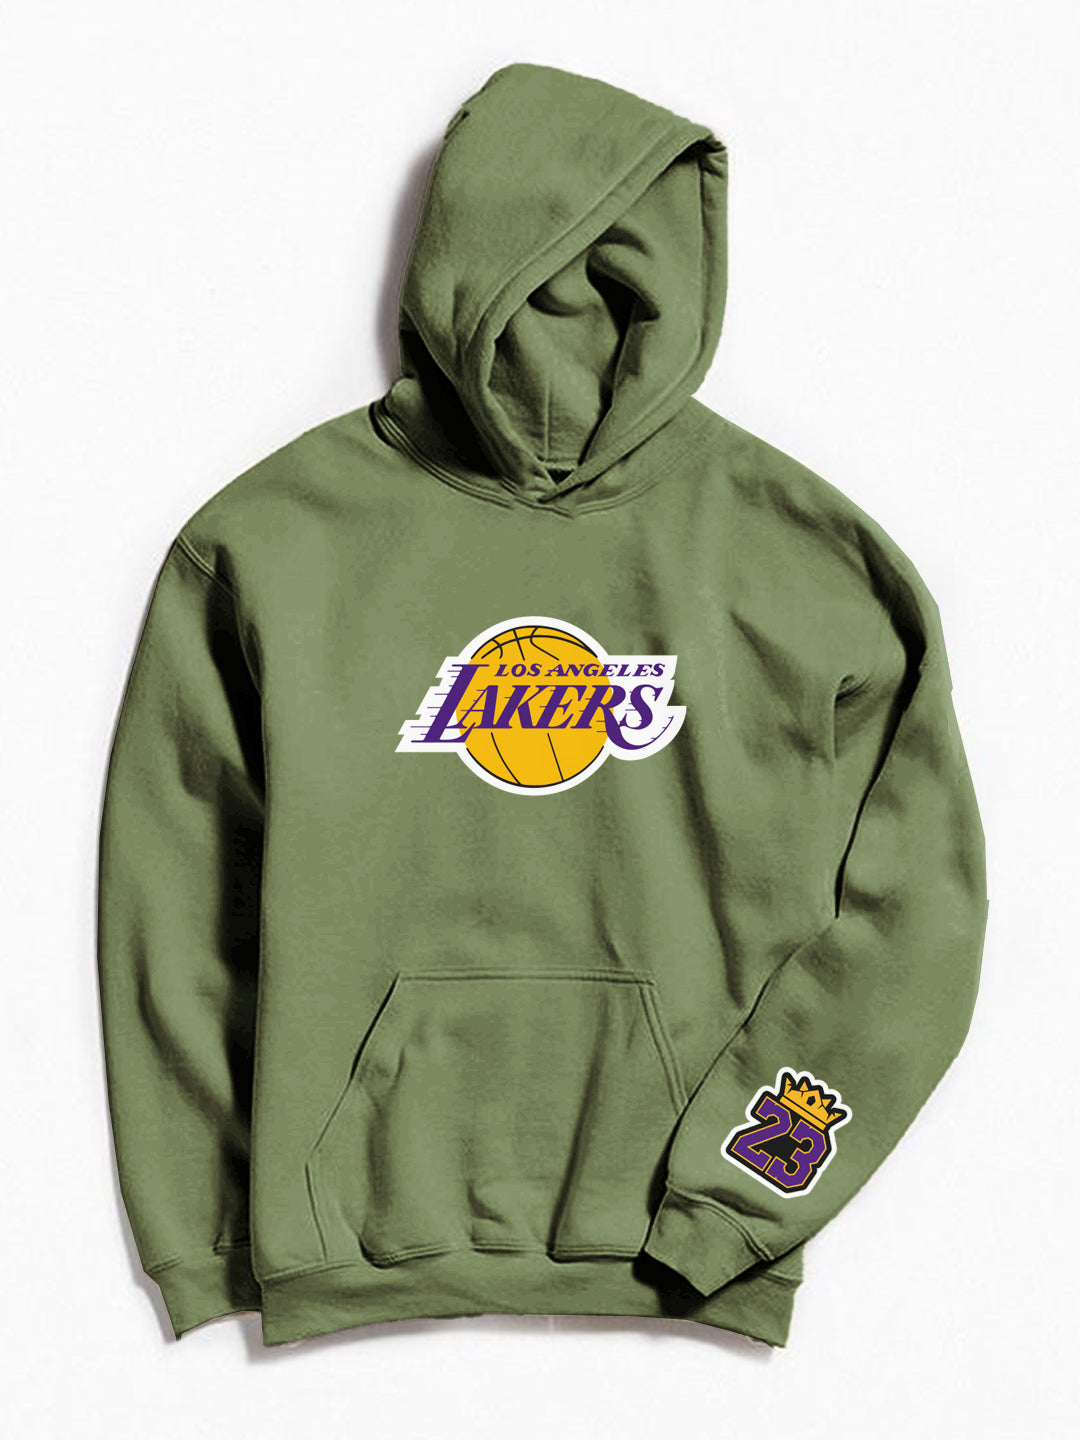 Oversized Lakers 23 Heavy Fleece Printed Hoodie